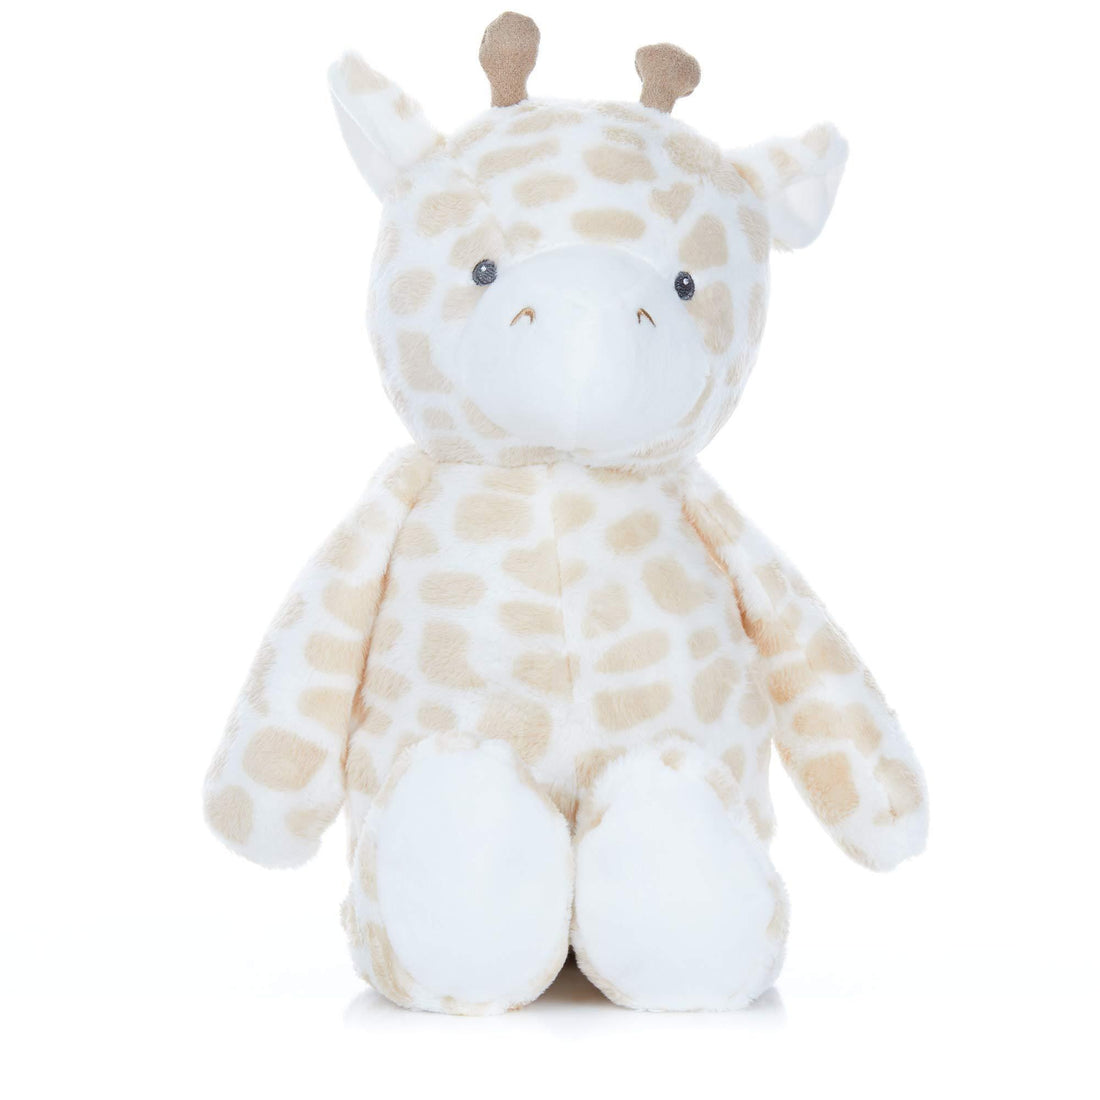 Giraffe Stuffed Animal - Kitty Hawk Kites Online Store